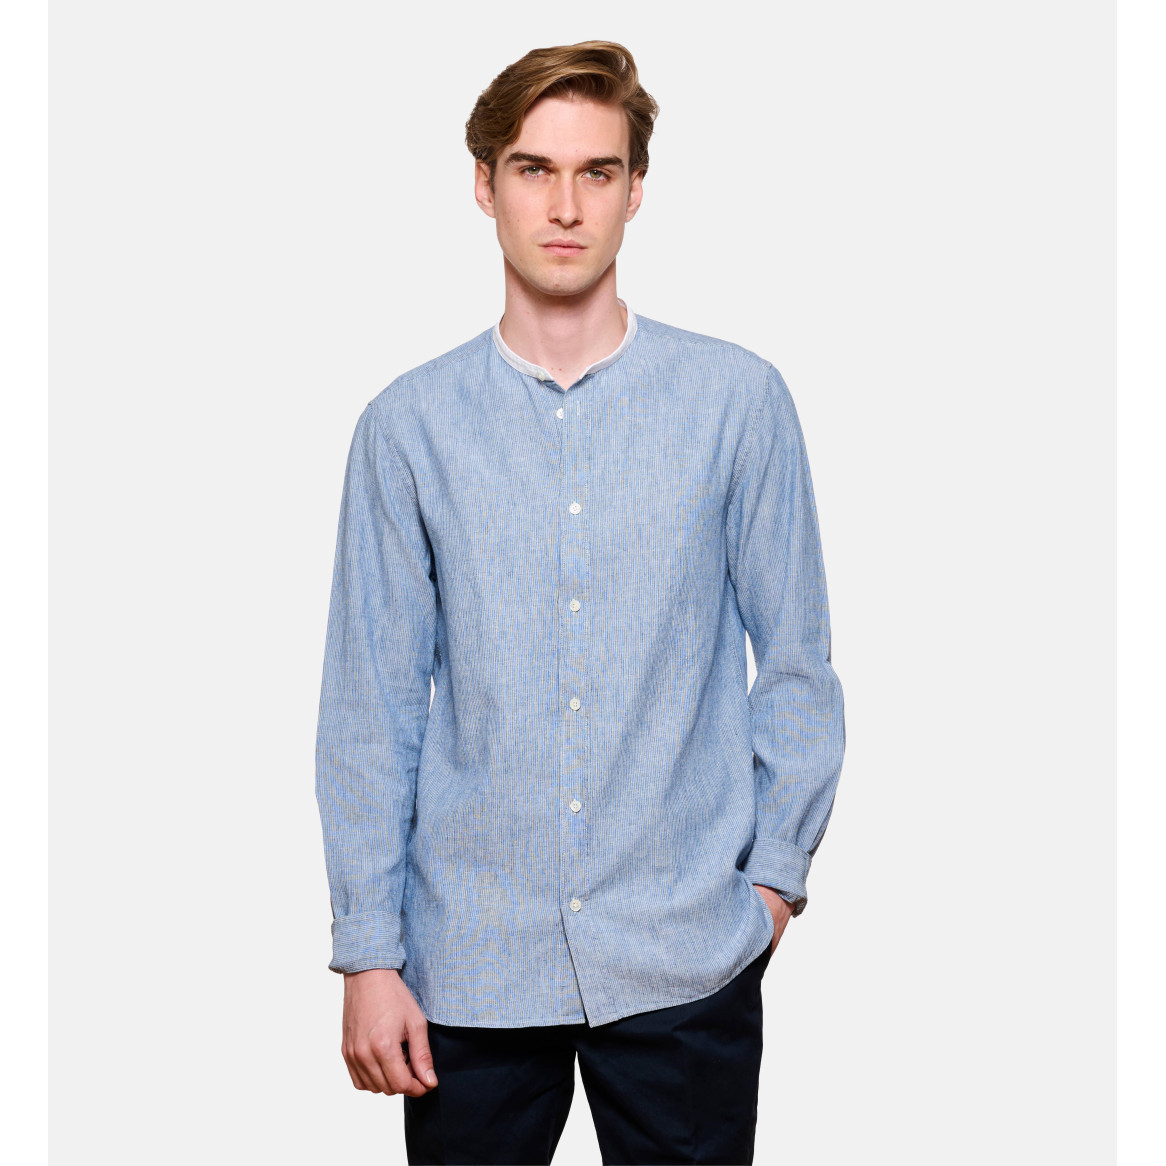 Chemise rayée indigo lin coton coupe droite col mao blanc